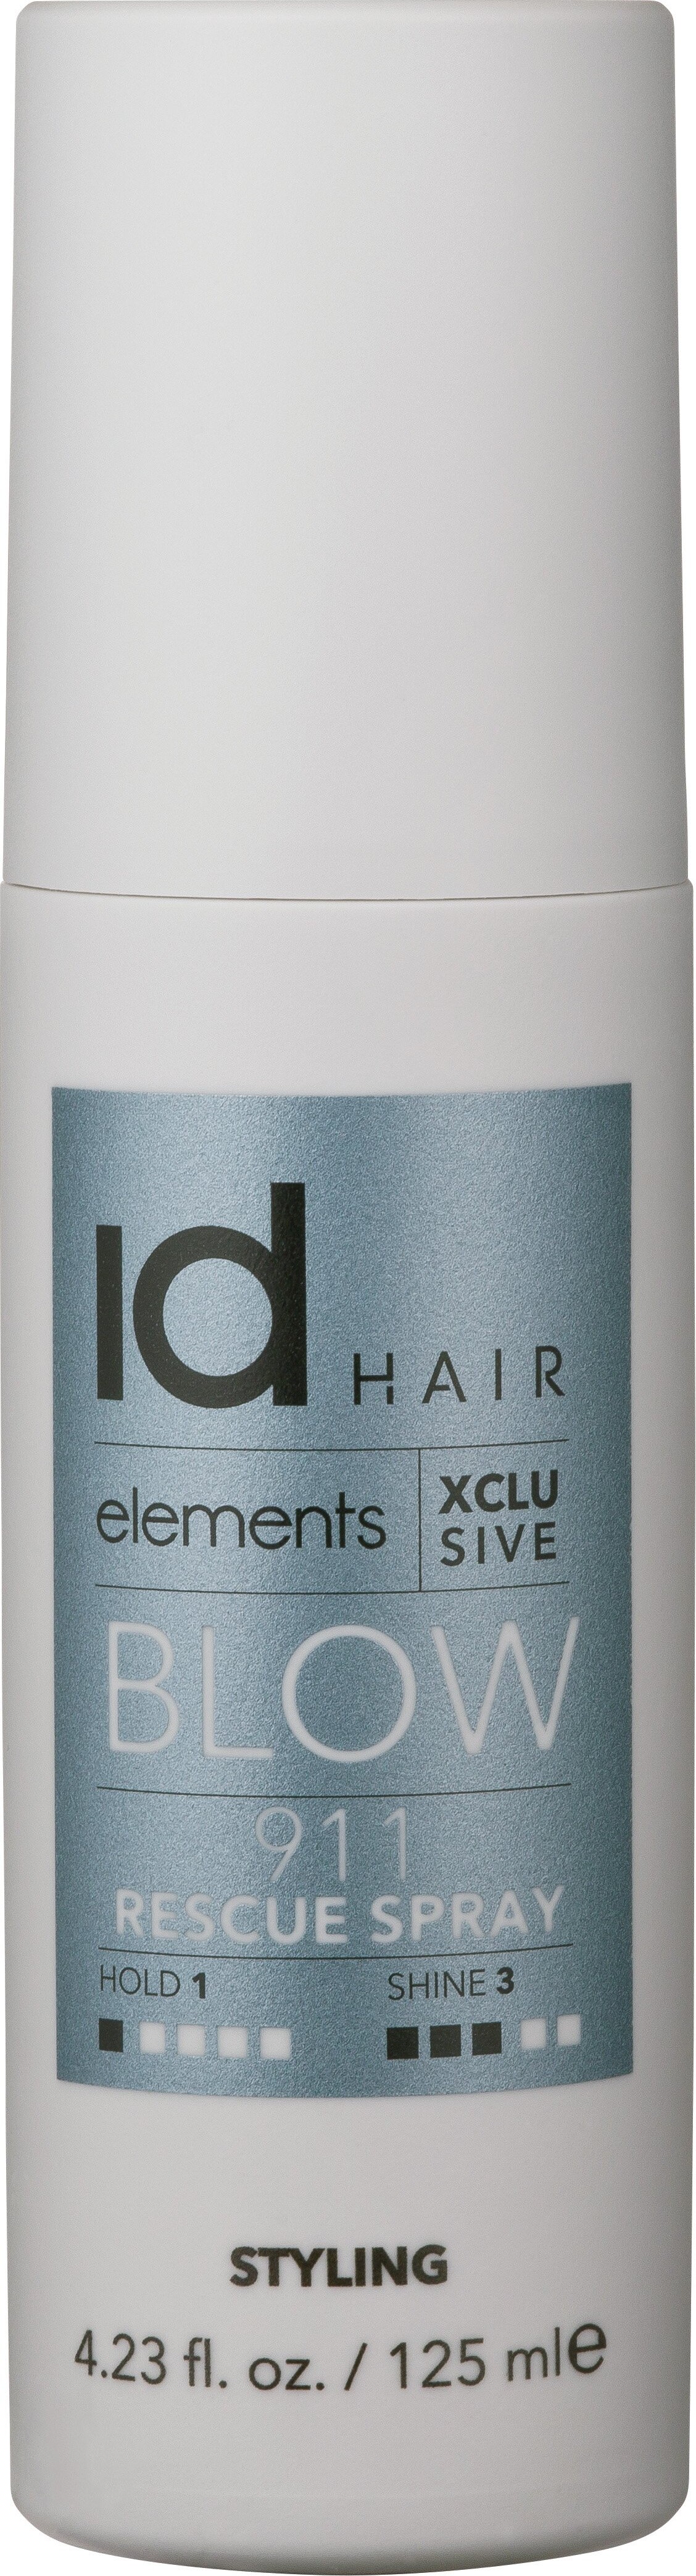 Billede af Id Hair - Elements Xclusive 911 Rescue Spray 125 Ml hos Gucca.dk